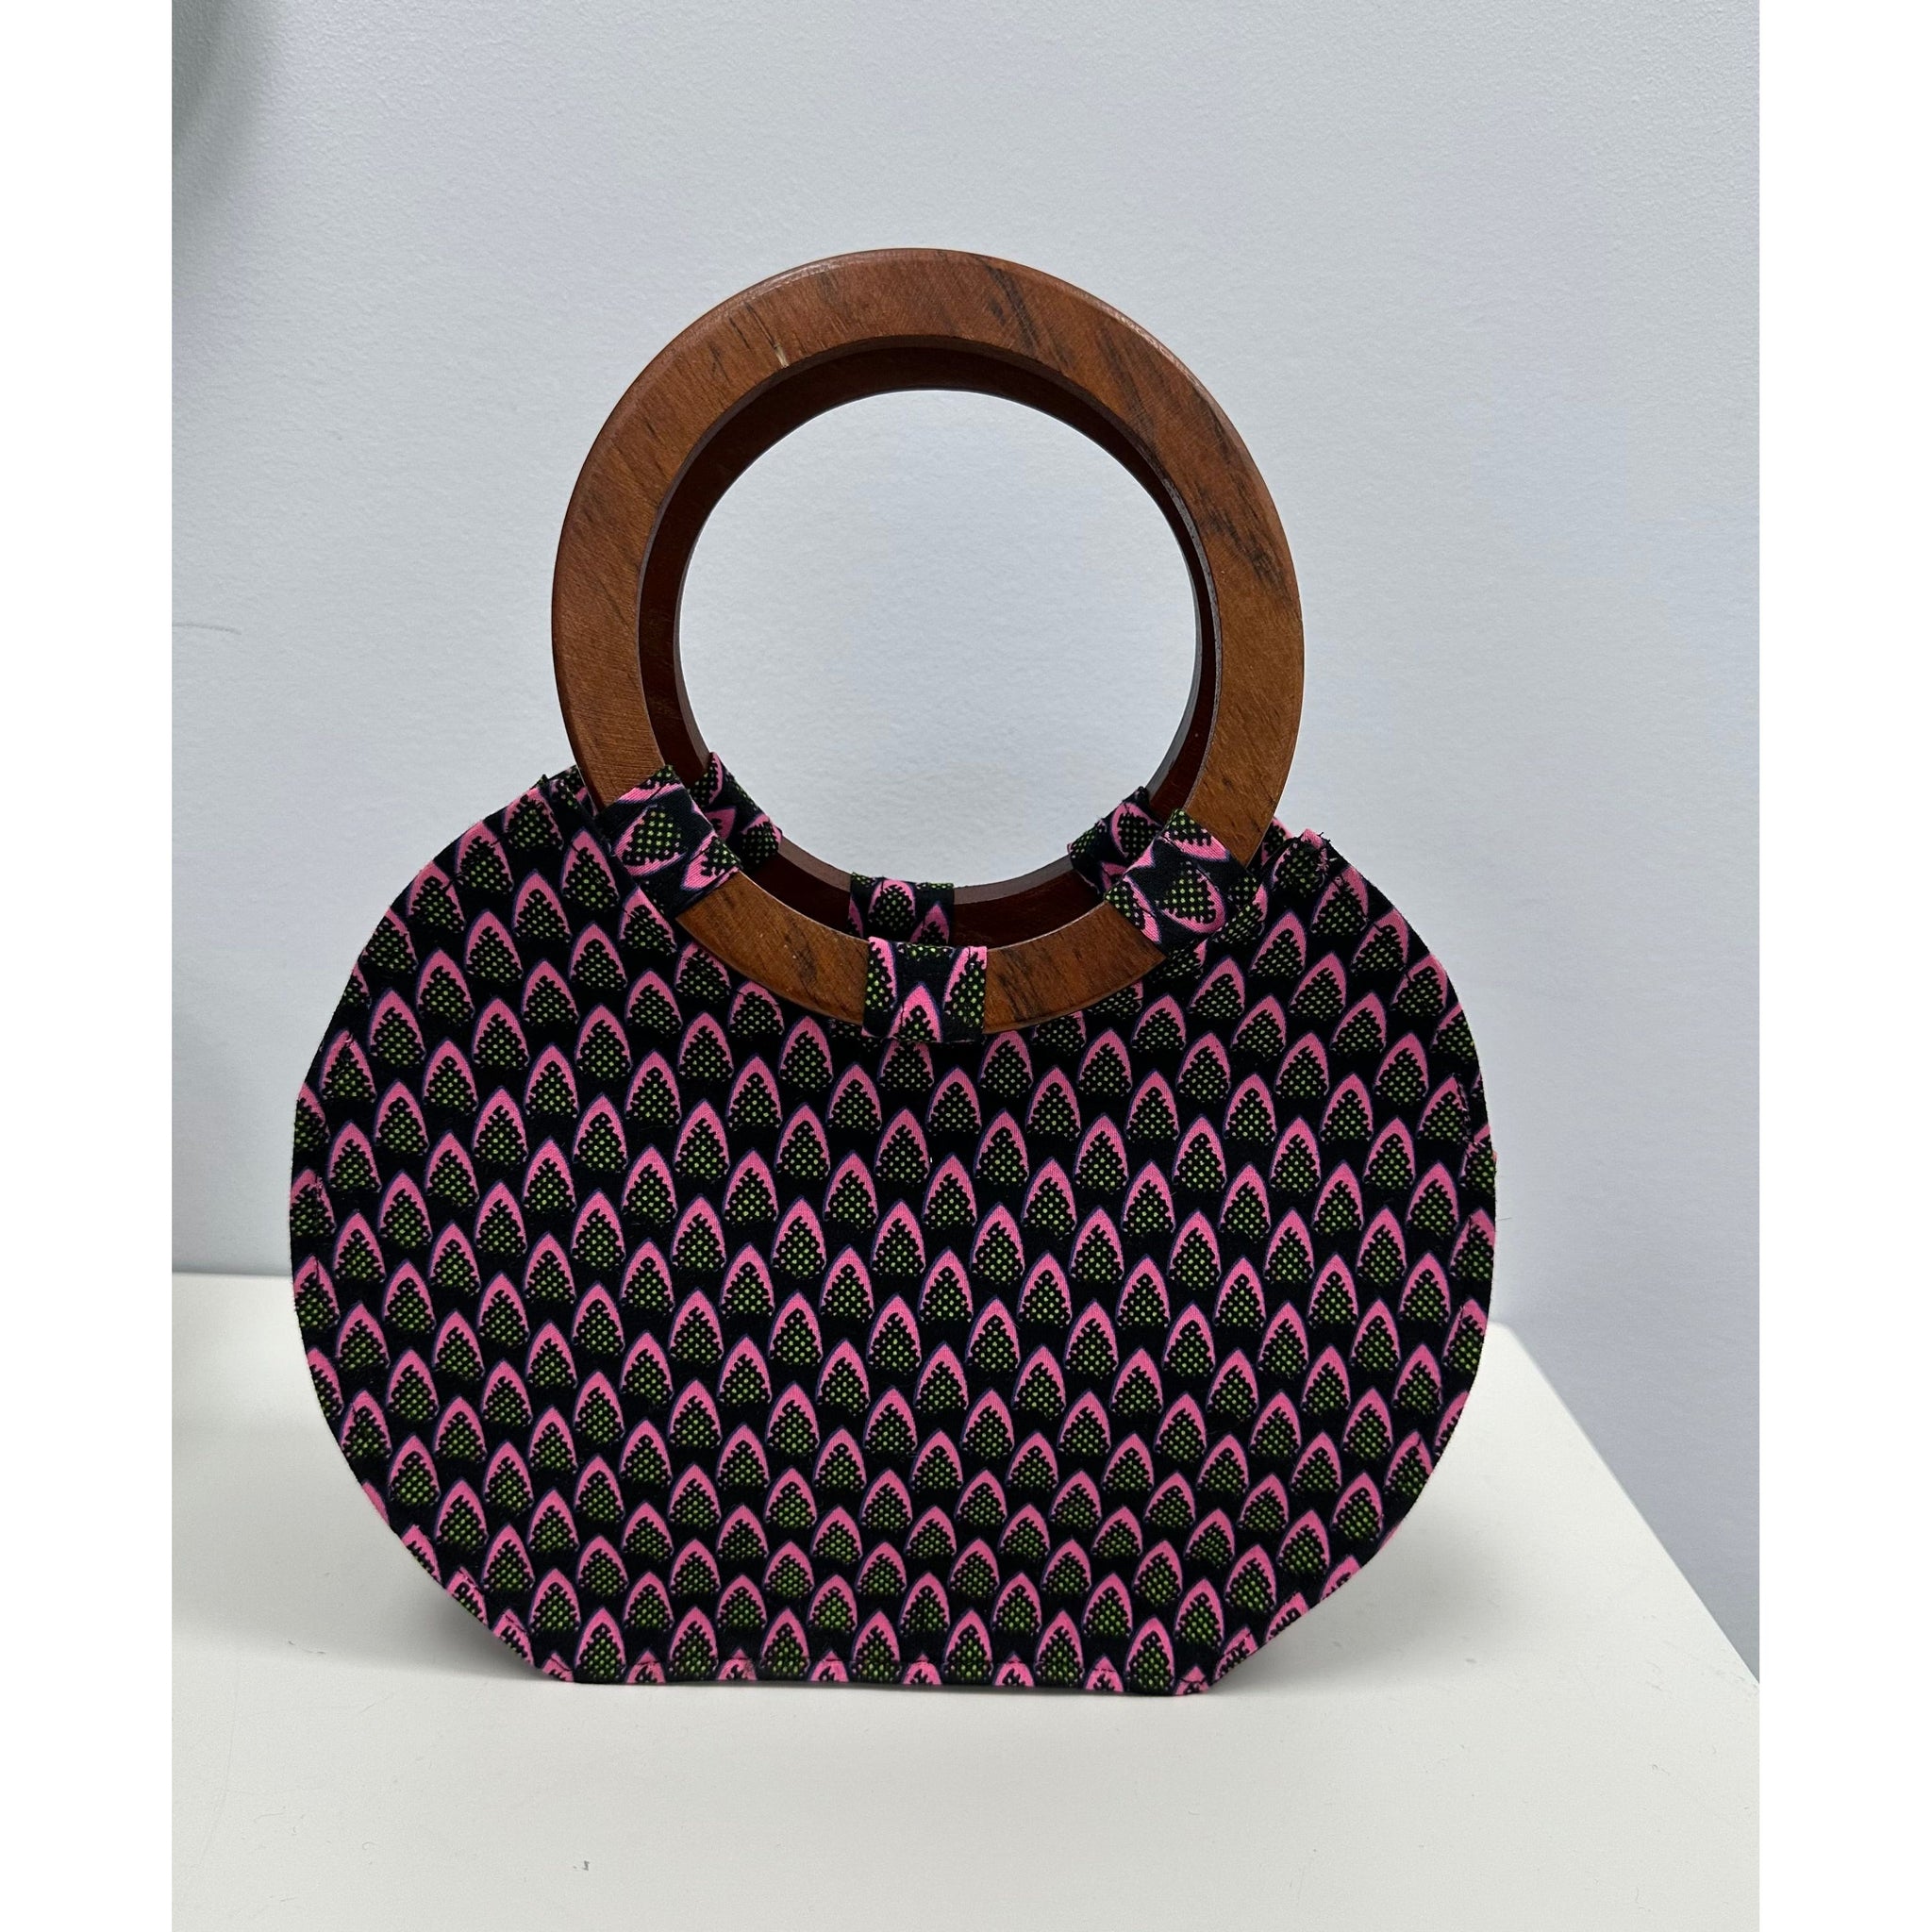 Pink and green tight patterned Wooden handle handbag